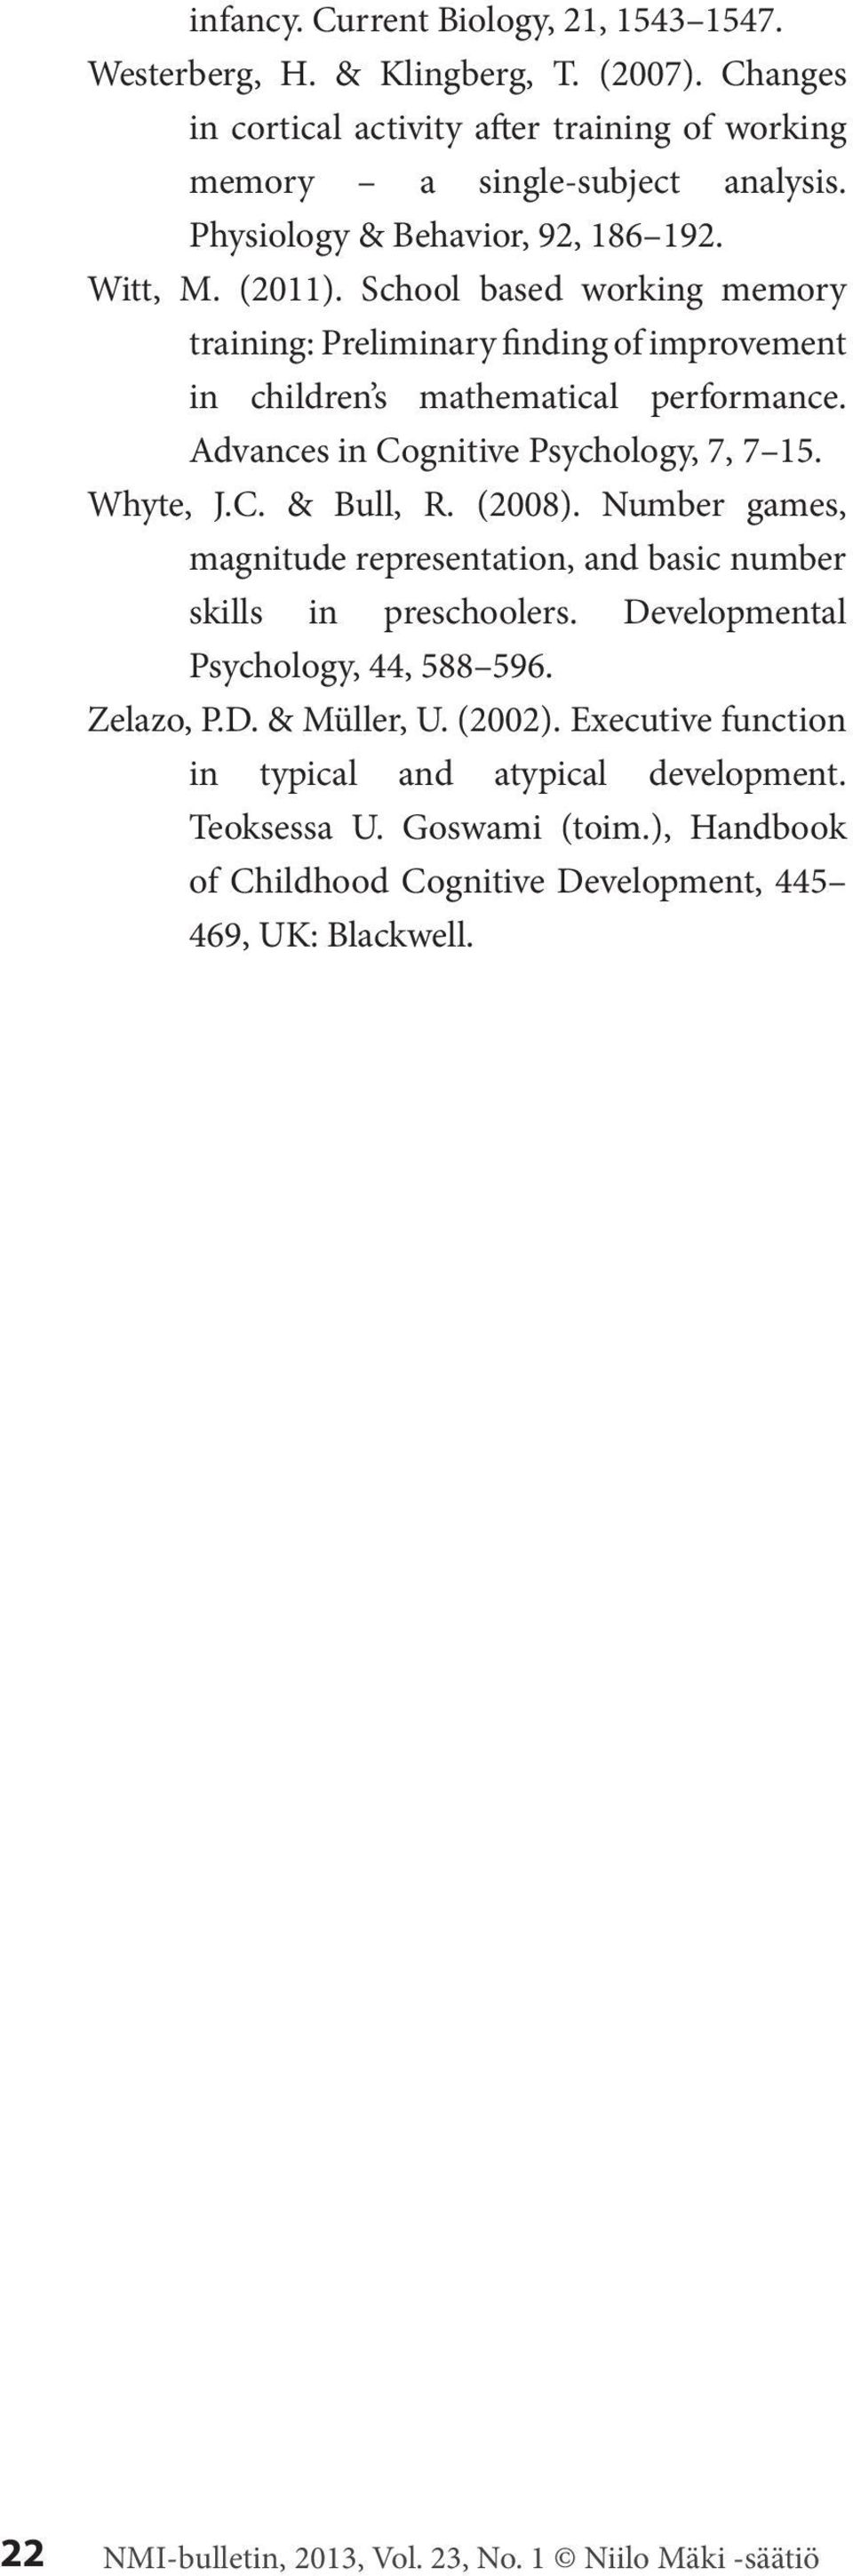 Advances in Cognitive Psychology, 7, 7 15. Whyte, J.C. & Bull, R. (2008). Number games, magnitude representation, and basic number skills in preschoolers. Developmental Psychology, 44, 588 596.